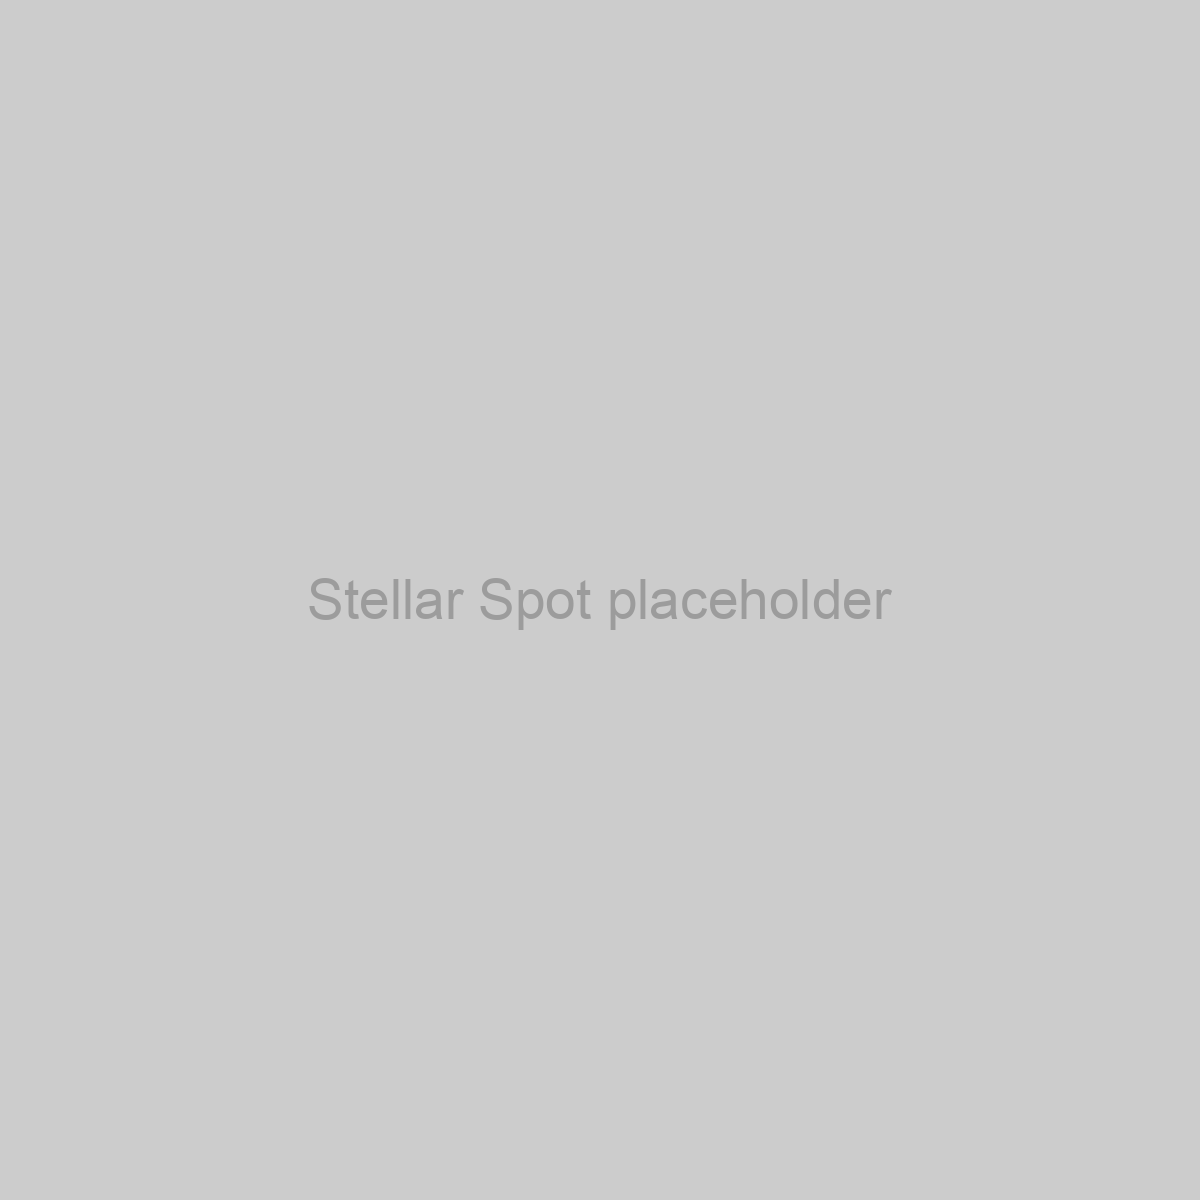 Stellar Spot Placeholder Image